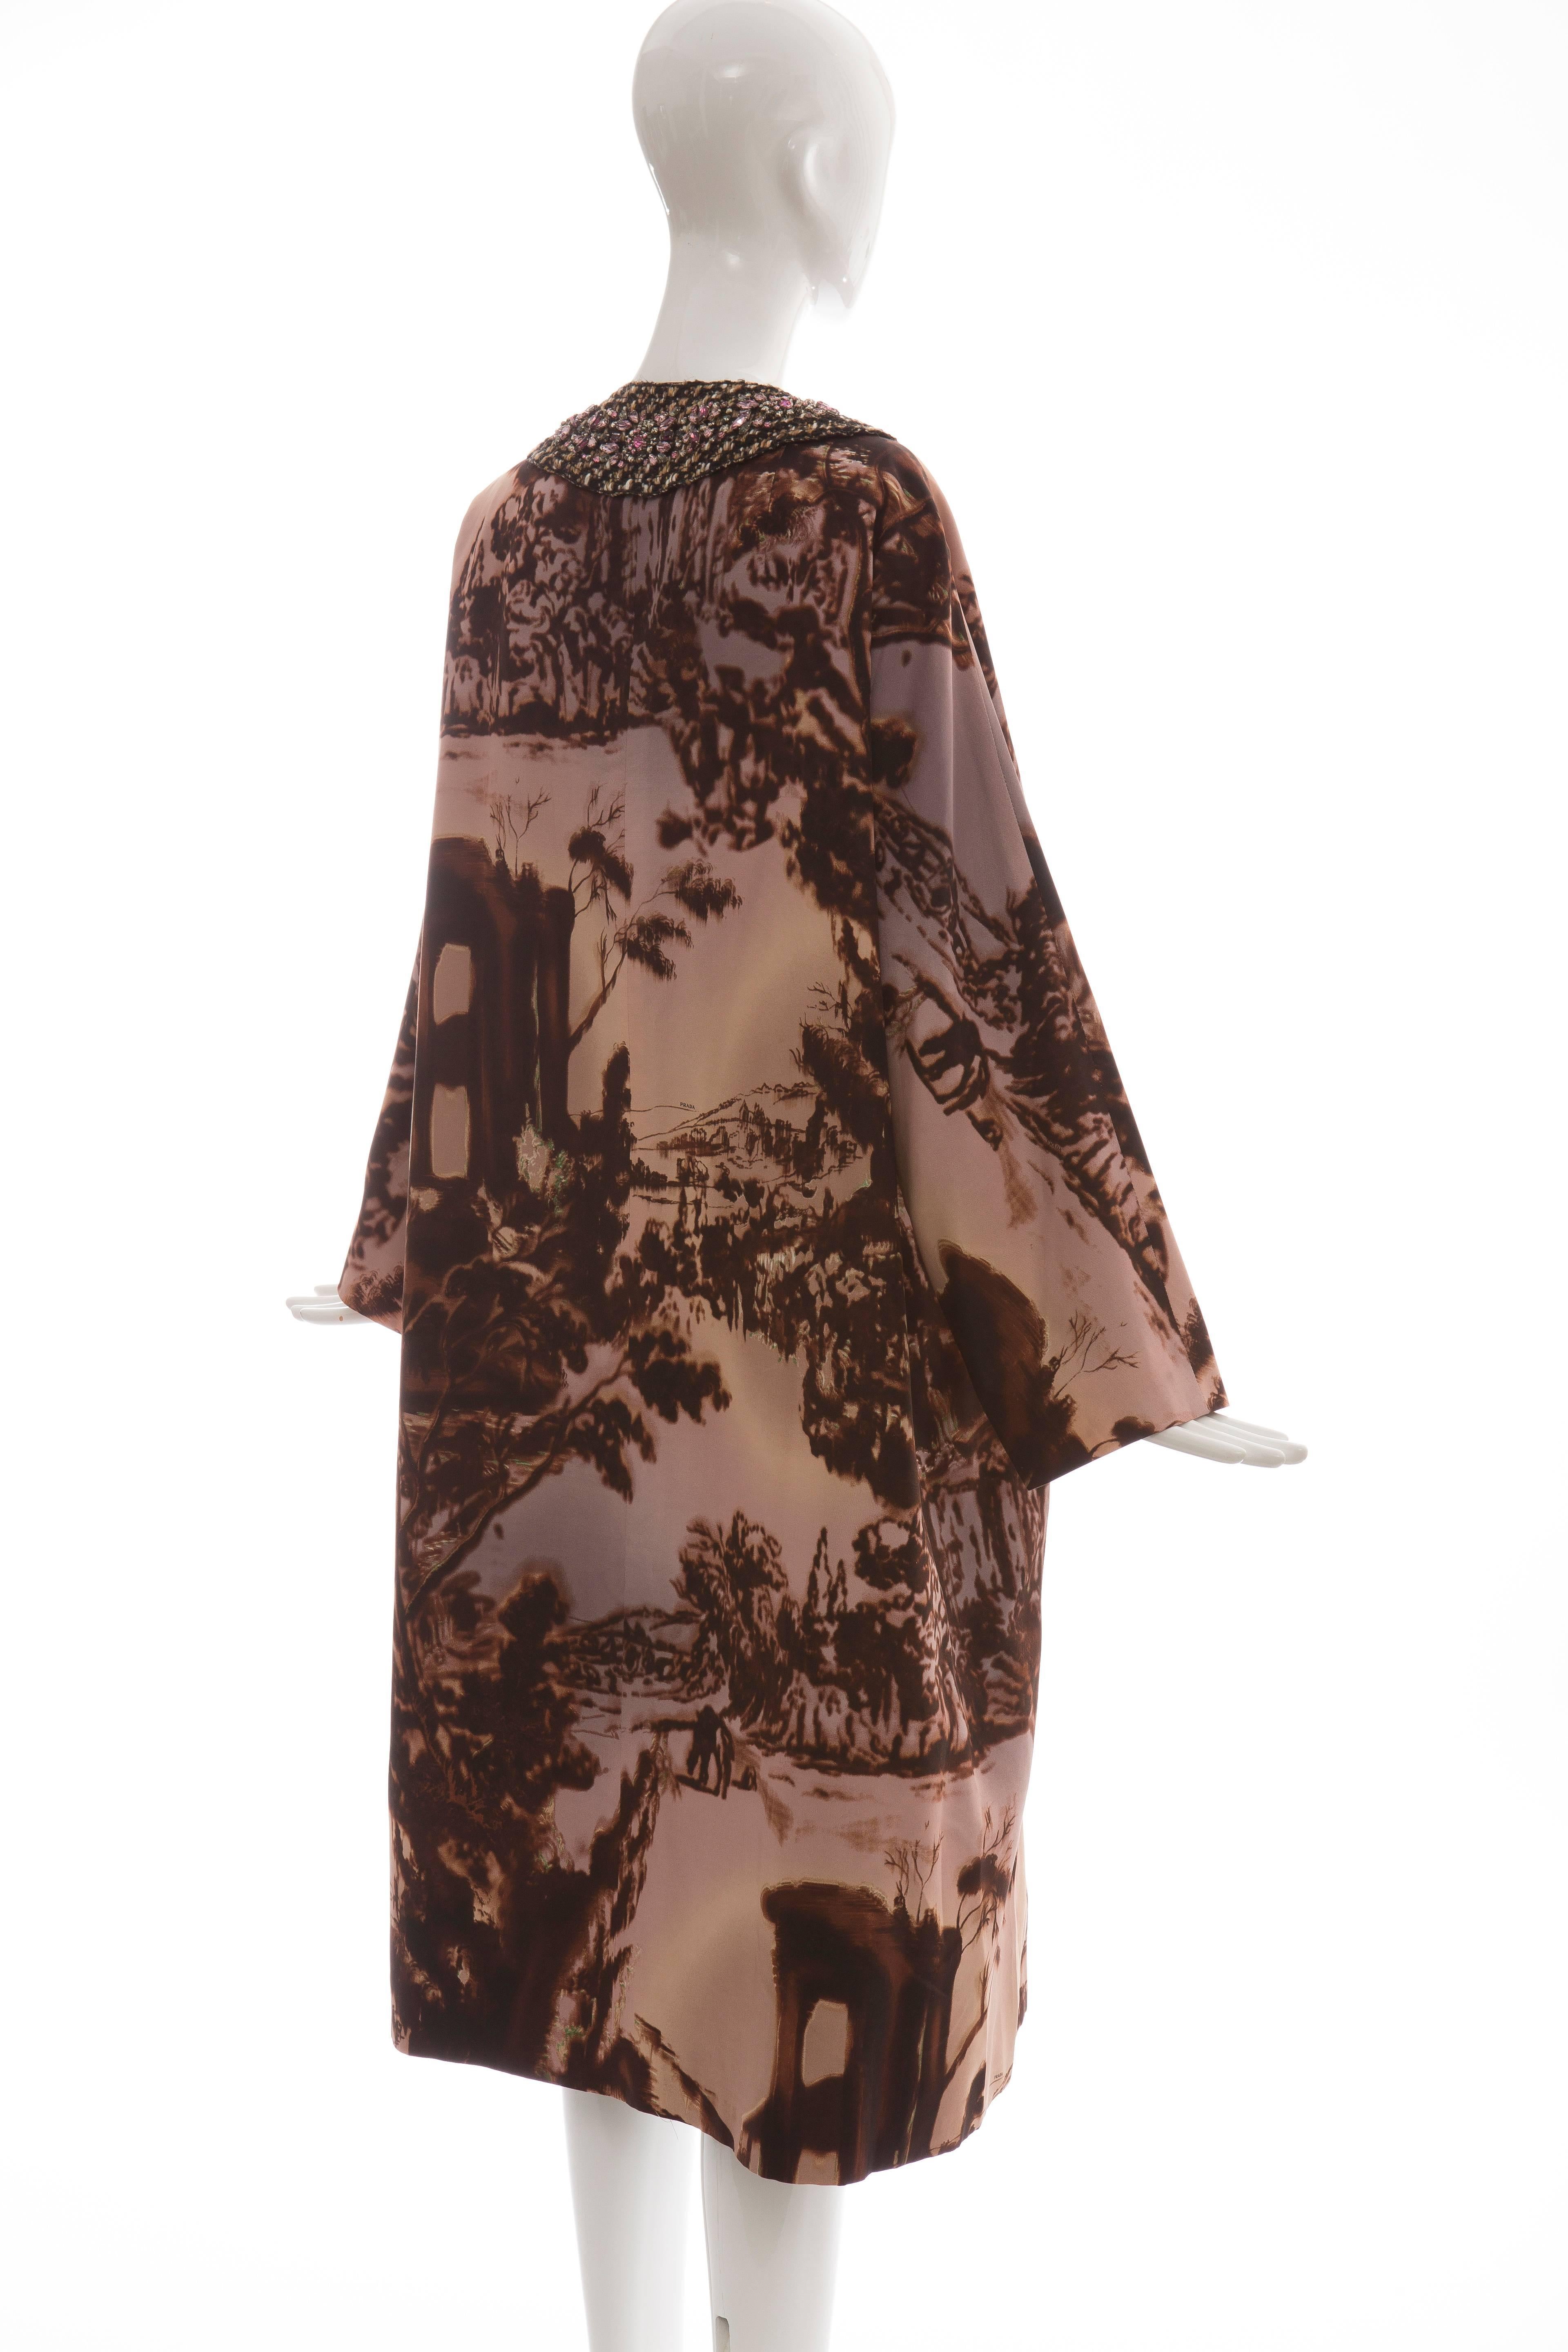 Prada Printed Silk Faille Coat With Tweed Jewel Neckline,  Autumn - Winter 2004 2